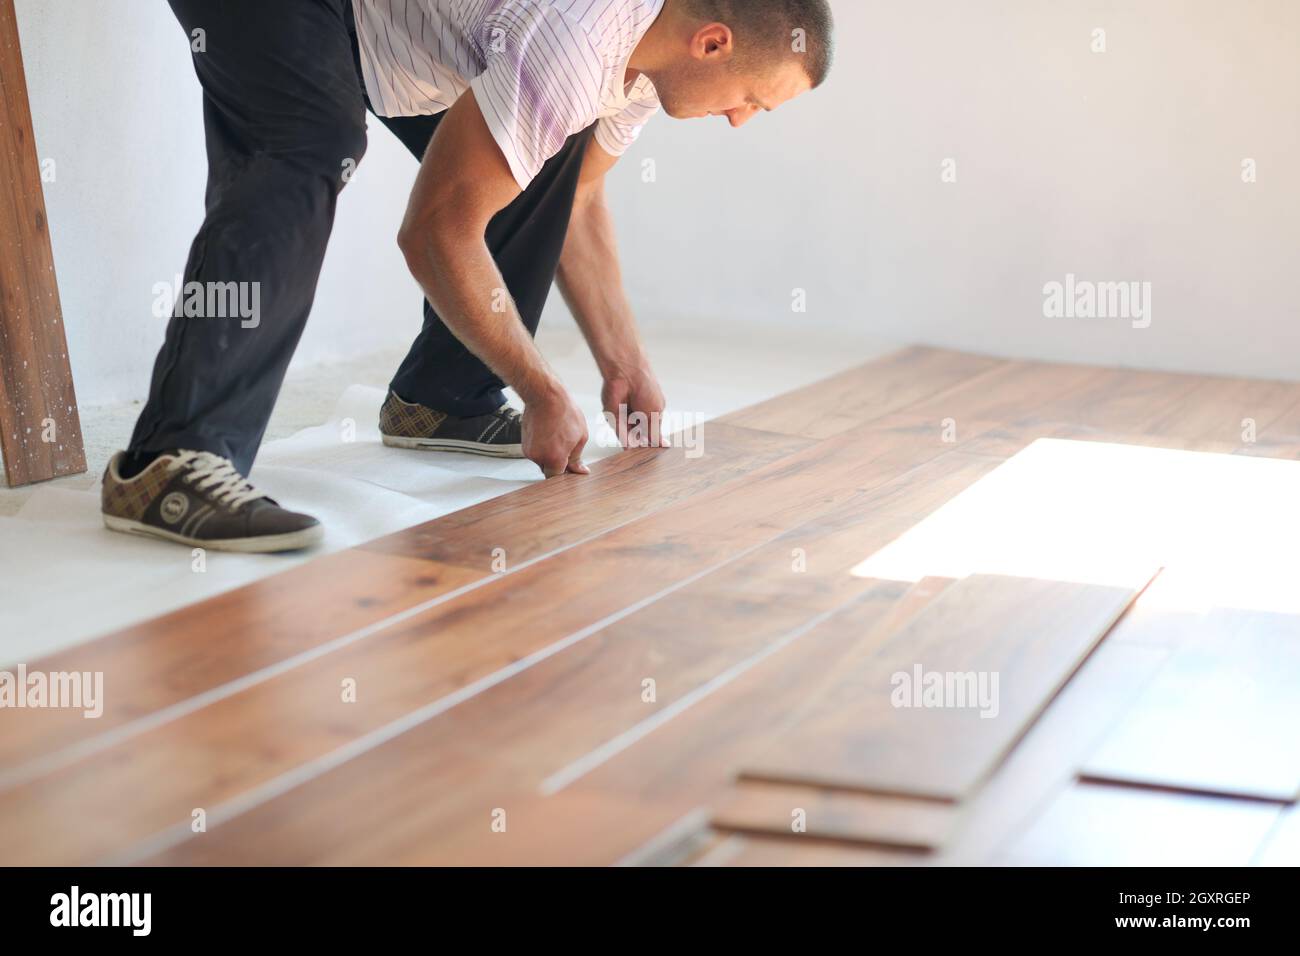 Lamellenförmig angeordneter Bodenbelag anzubringen in neue Haus innen  Stockfotografie - Alamy